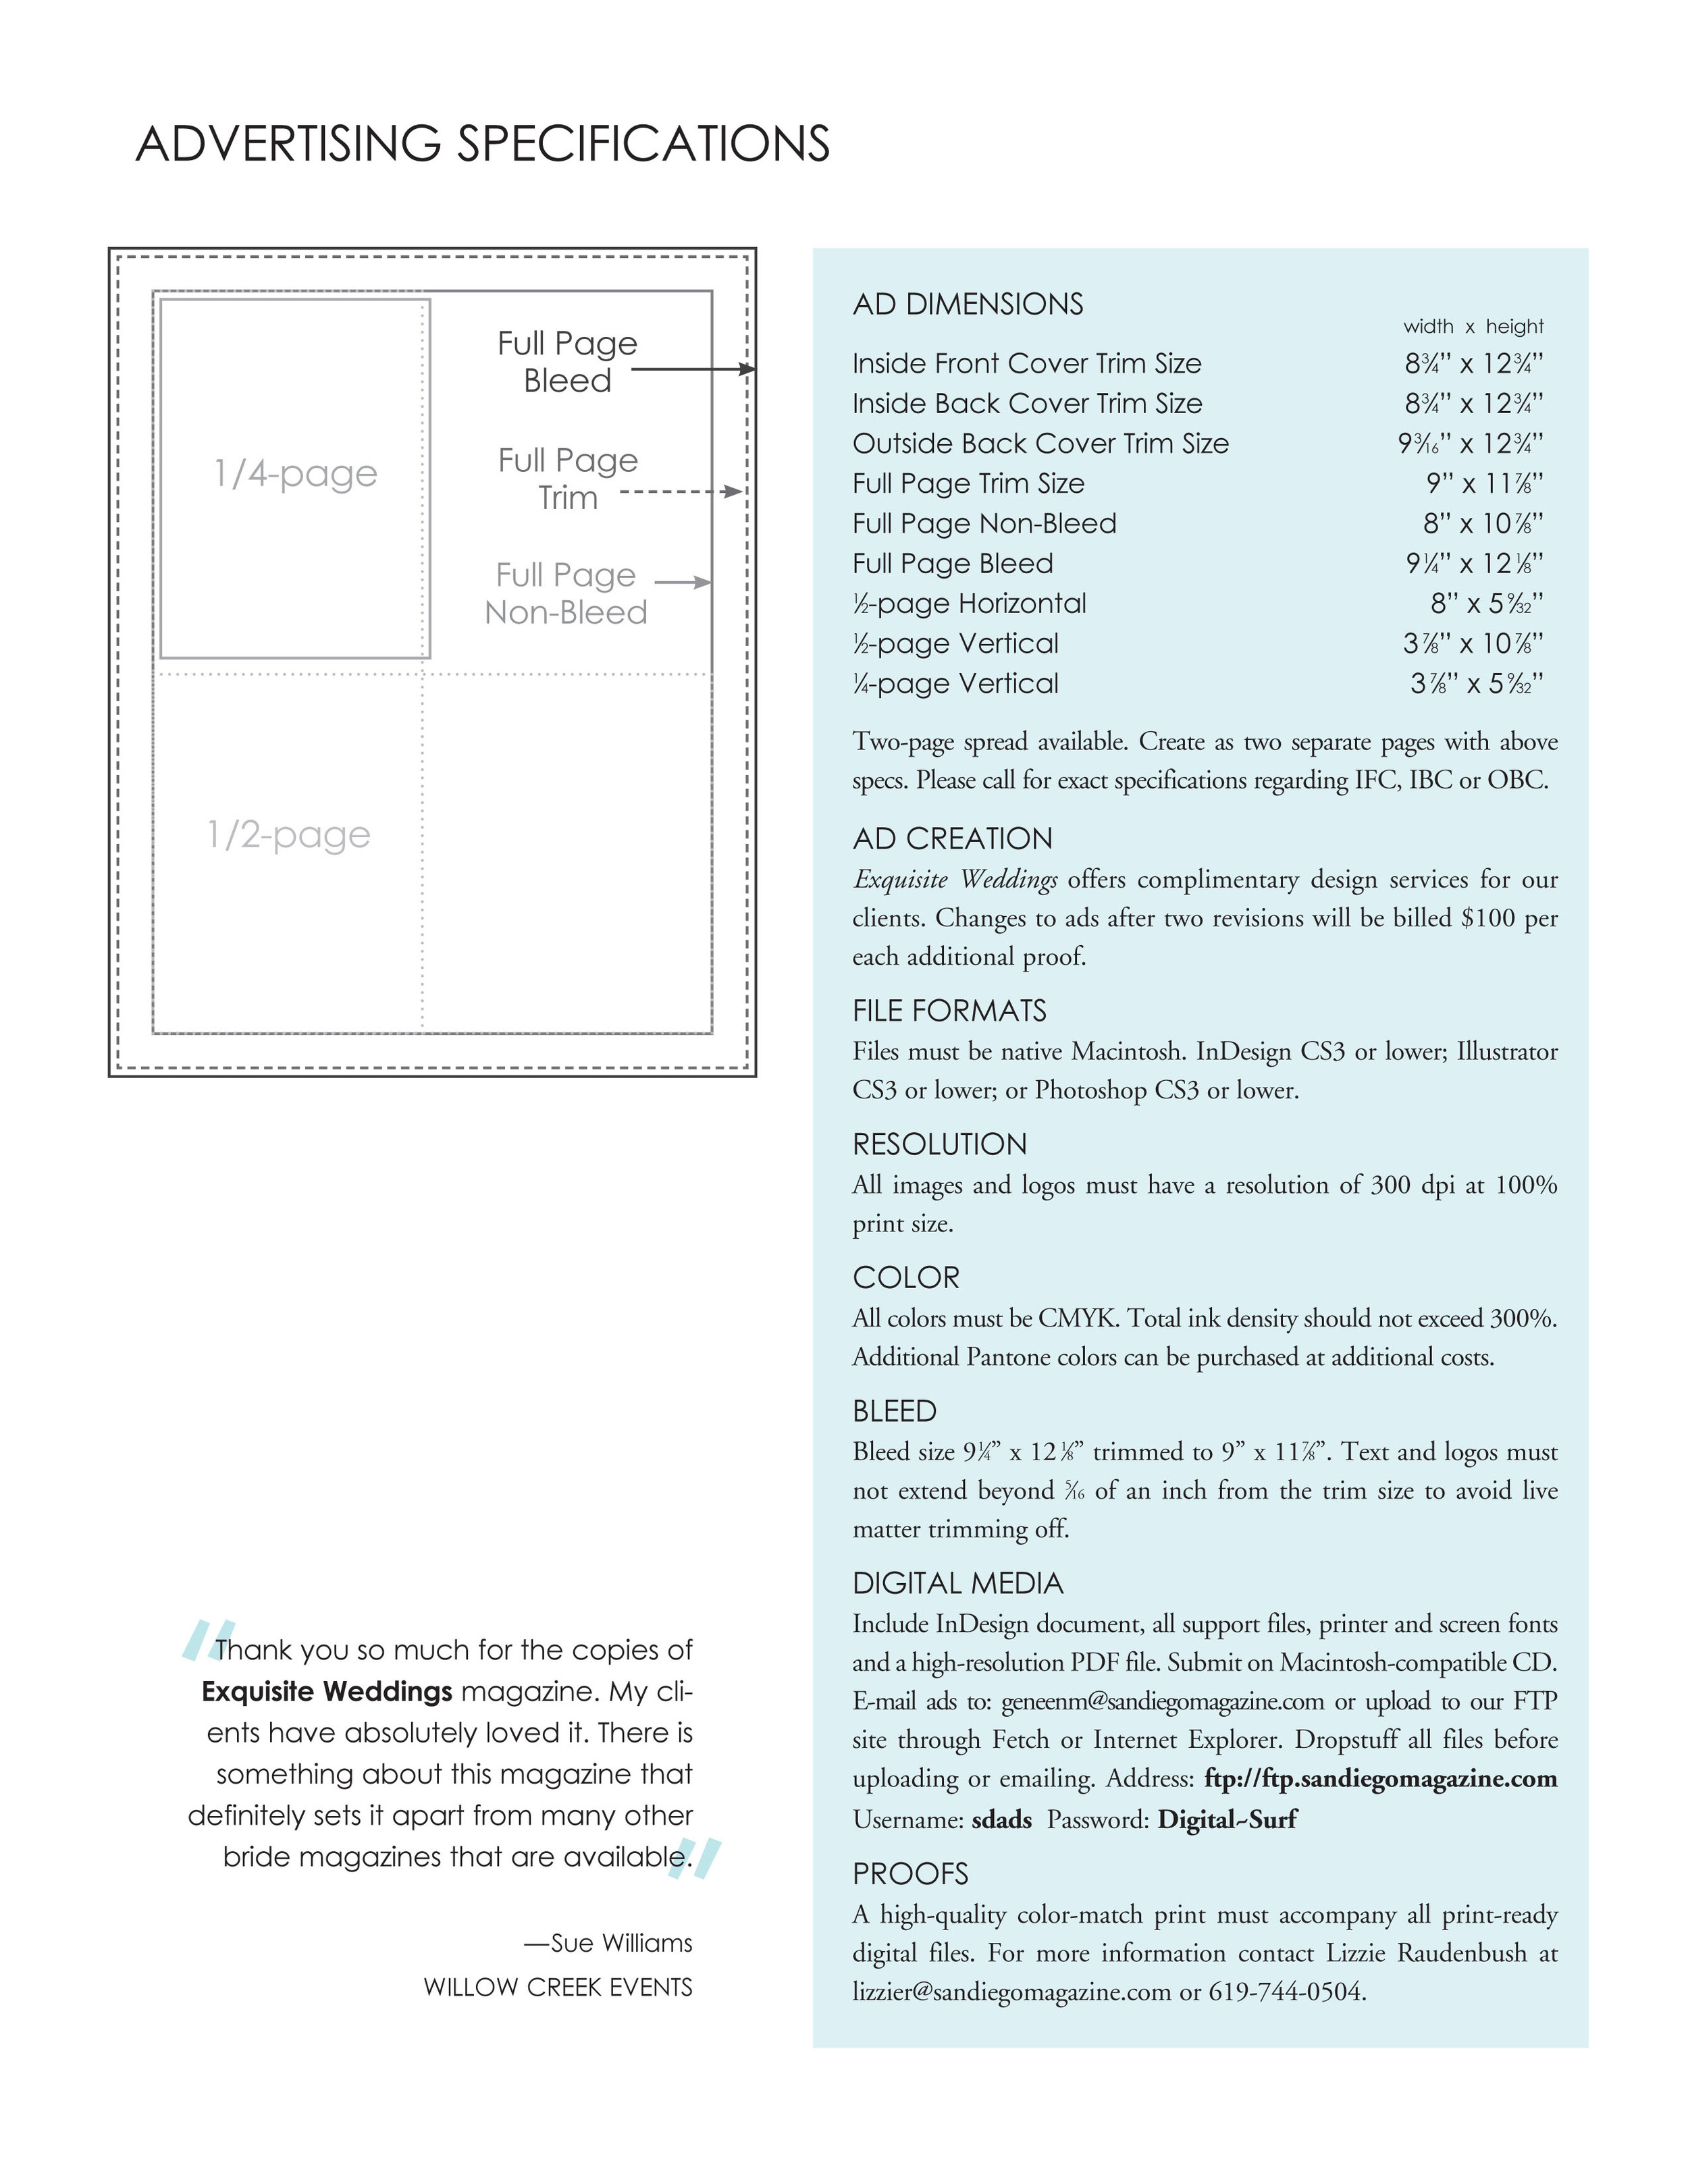 EW Media Kit_Print-6.jpg